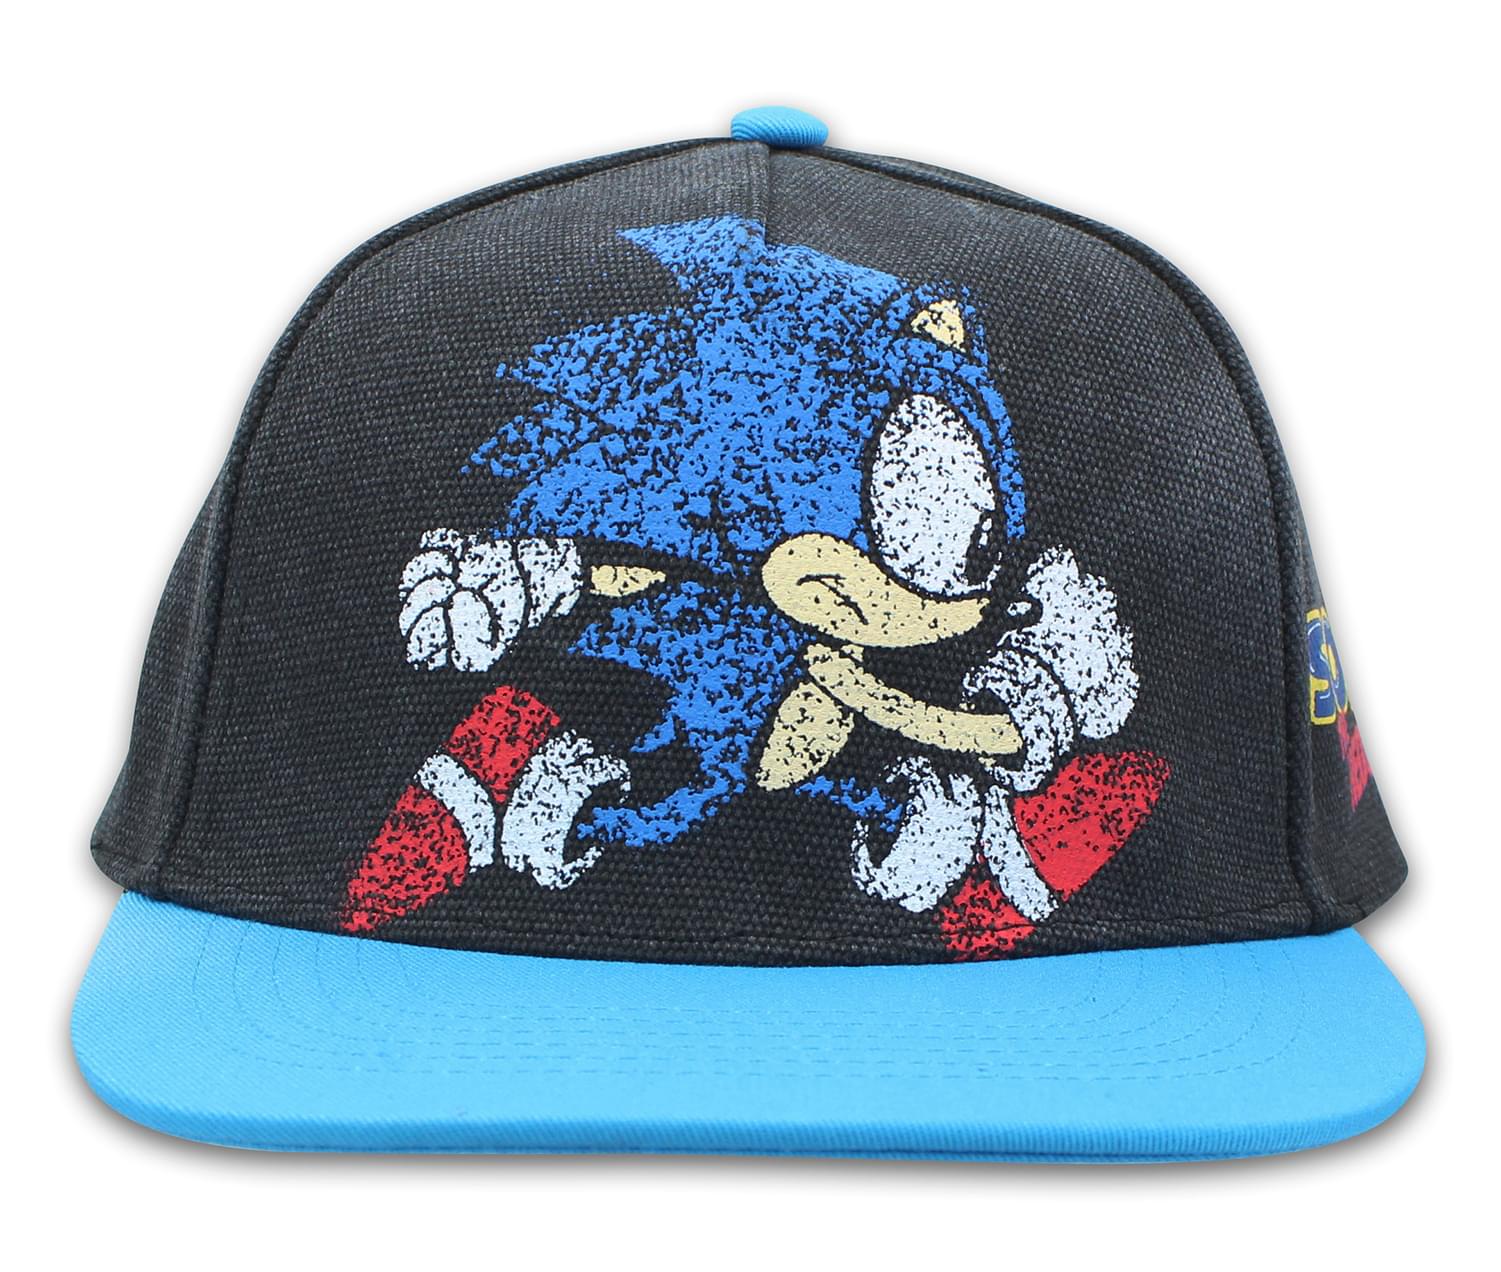 sonic the hedgehog hat